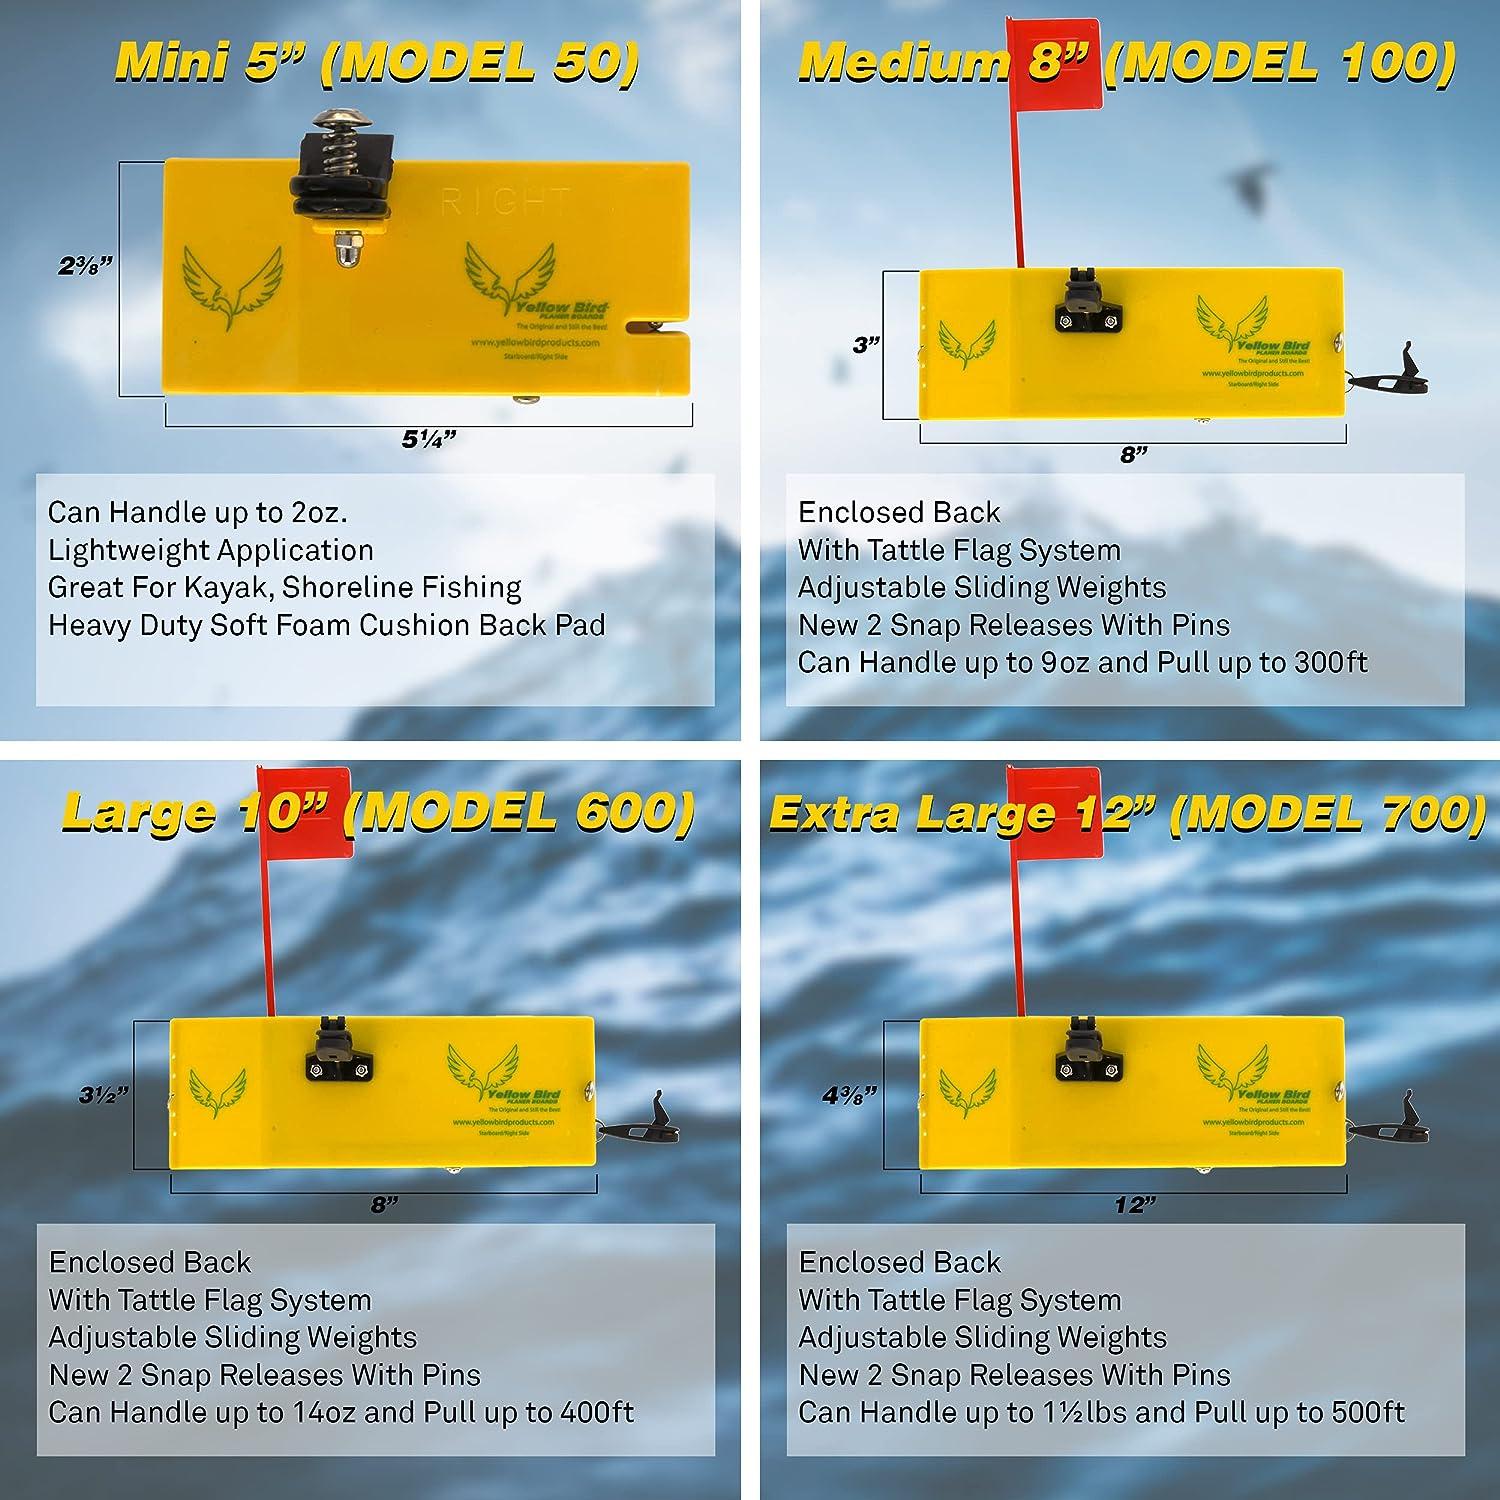 Large Yellow Bird Port Side Planer Board (600P) 10 - Yellow Bird Fishing  Products